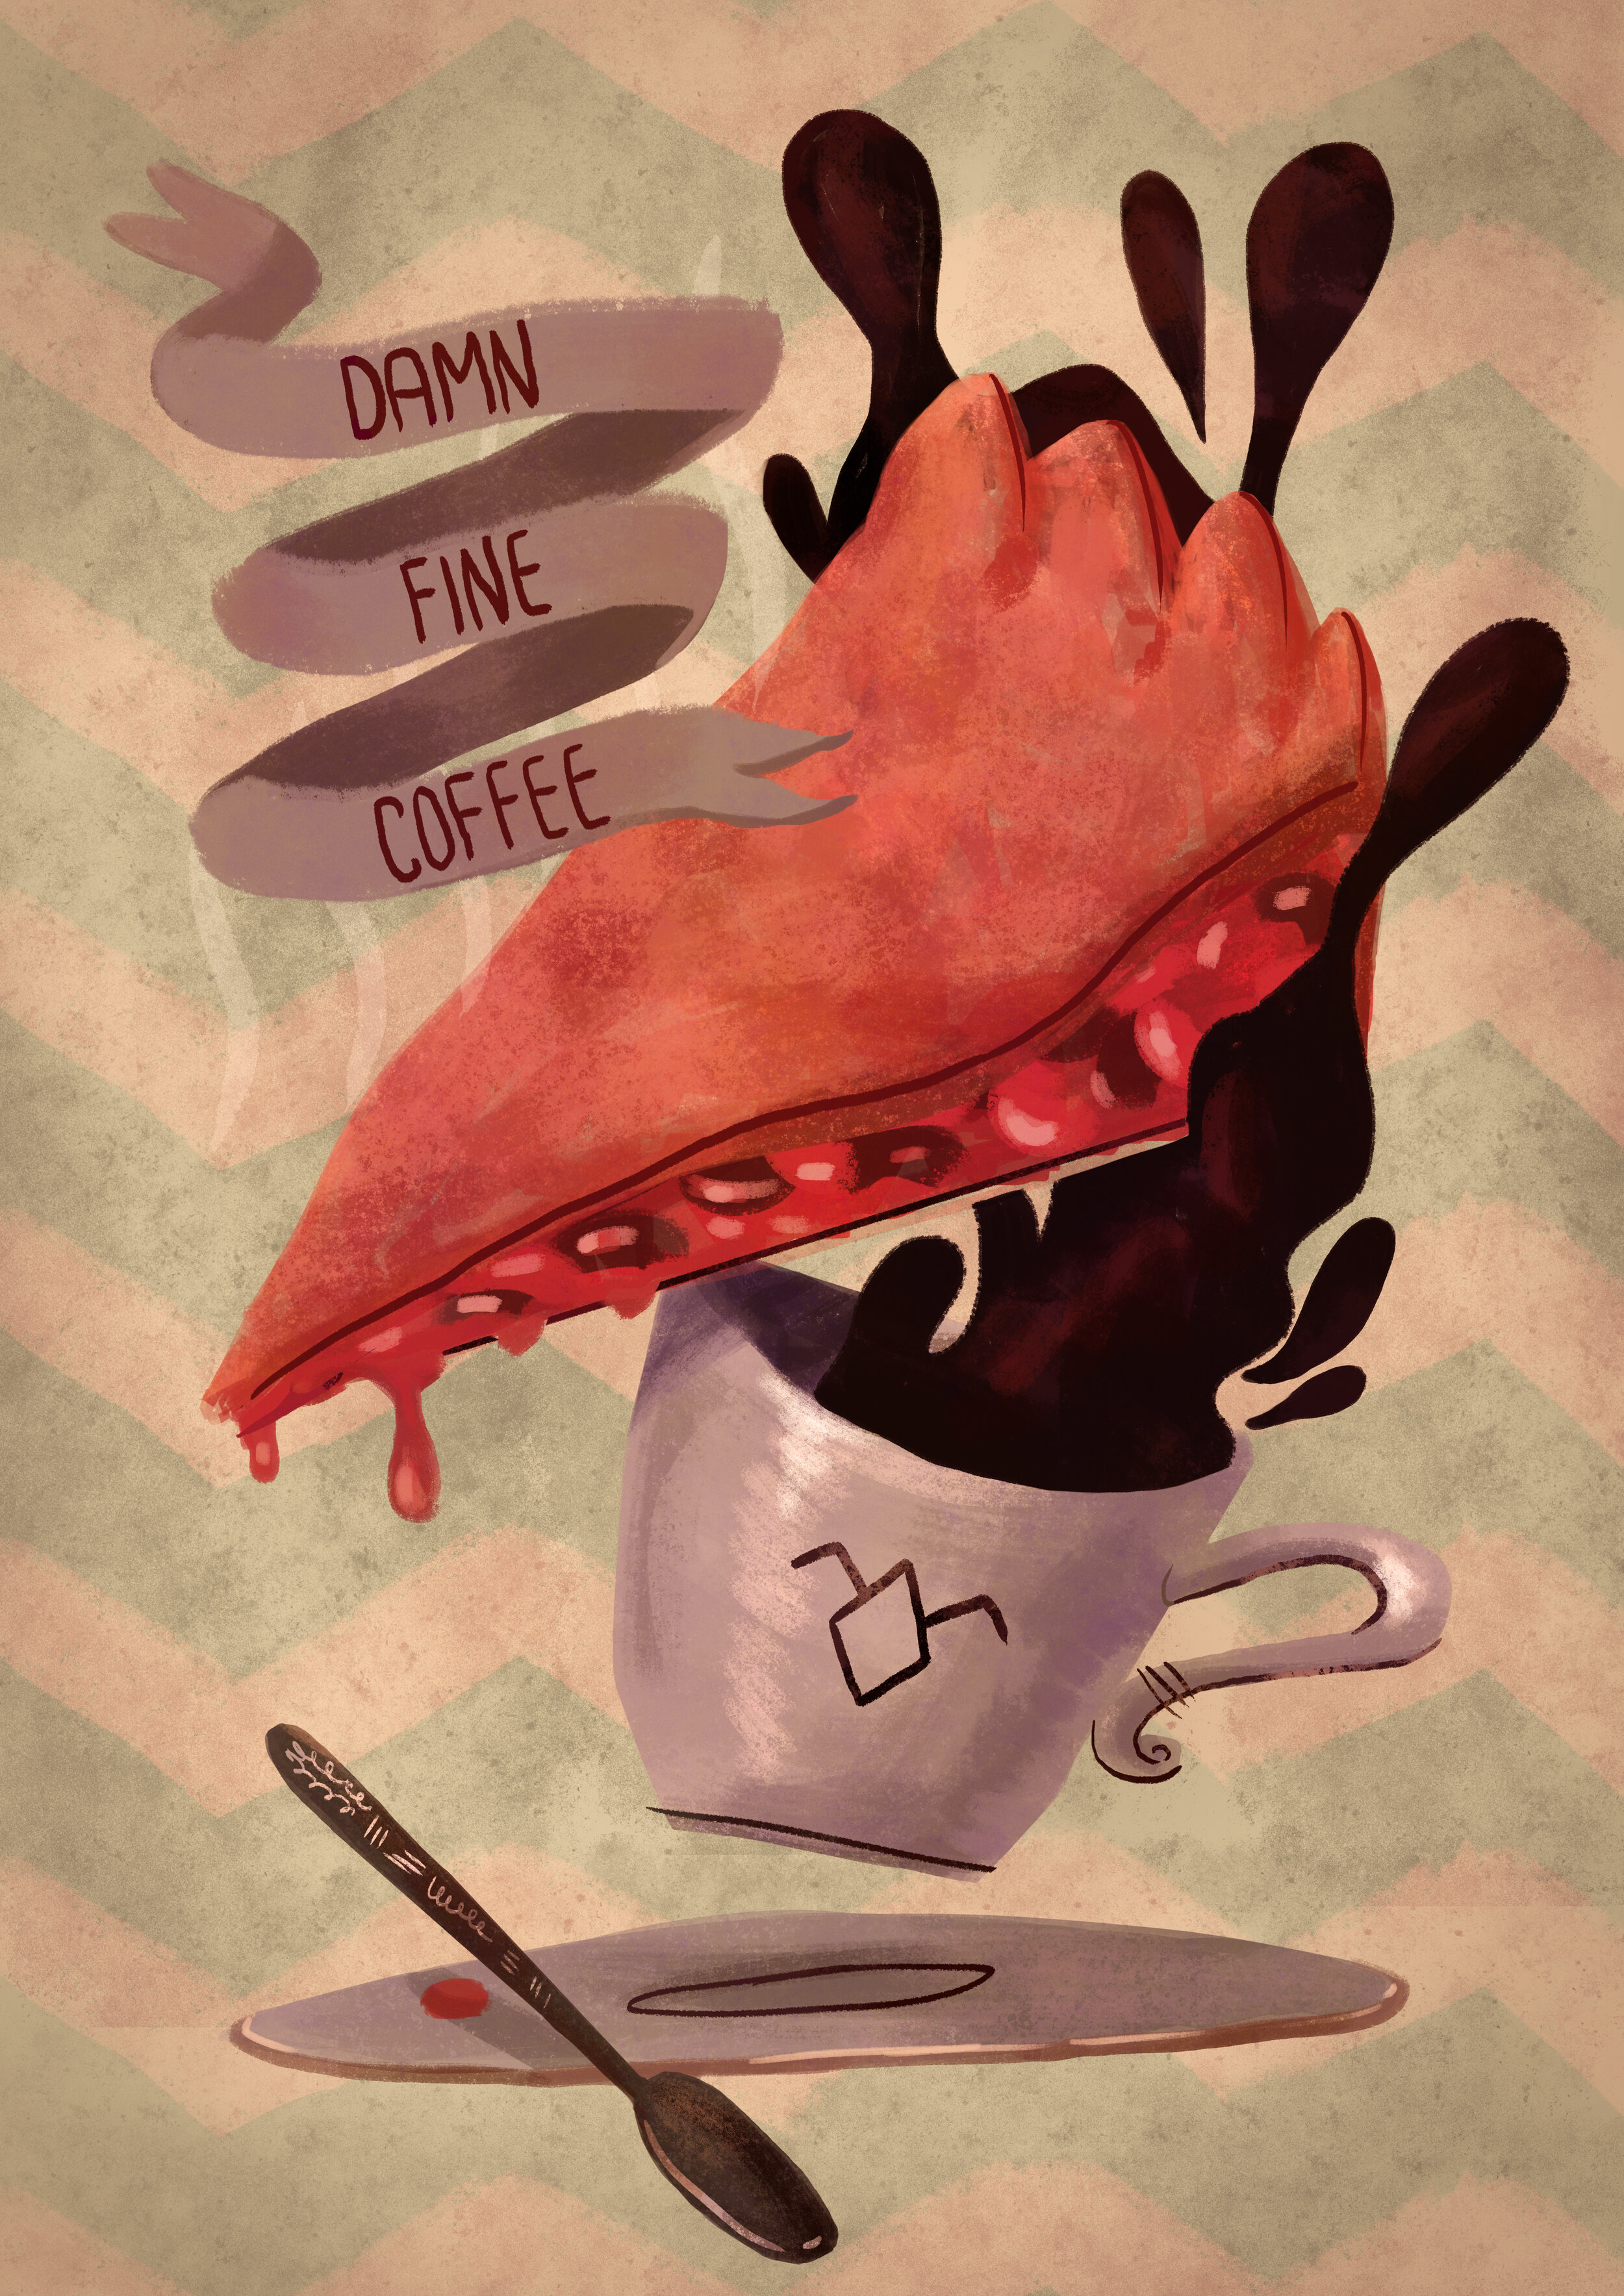 Damn Fine Coffee - Twin Peaks Poster